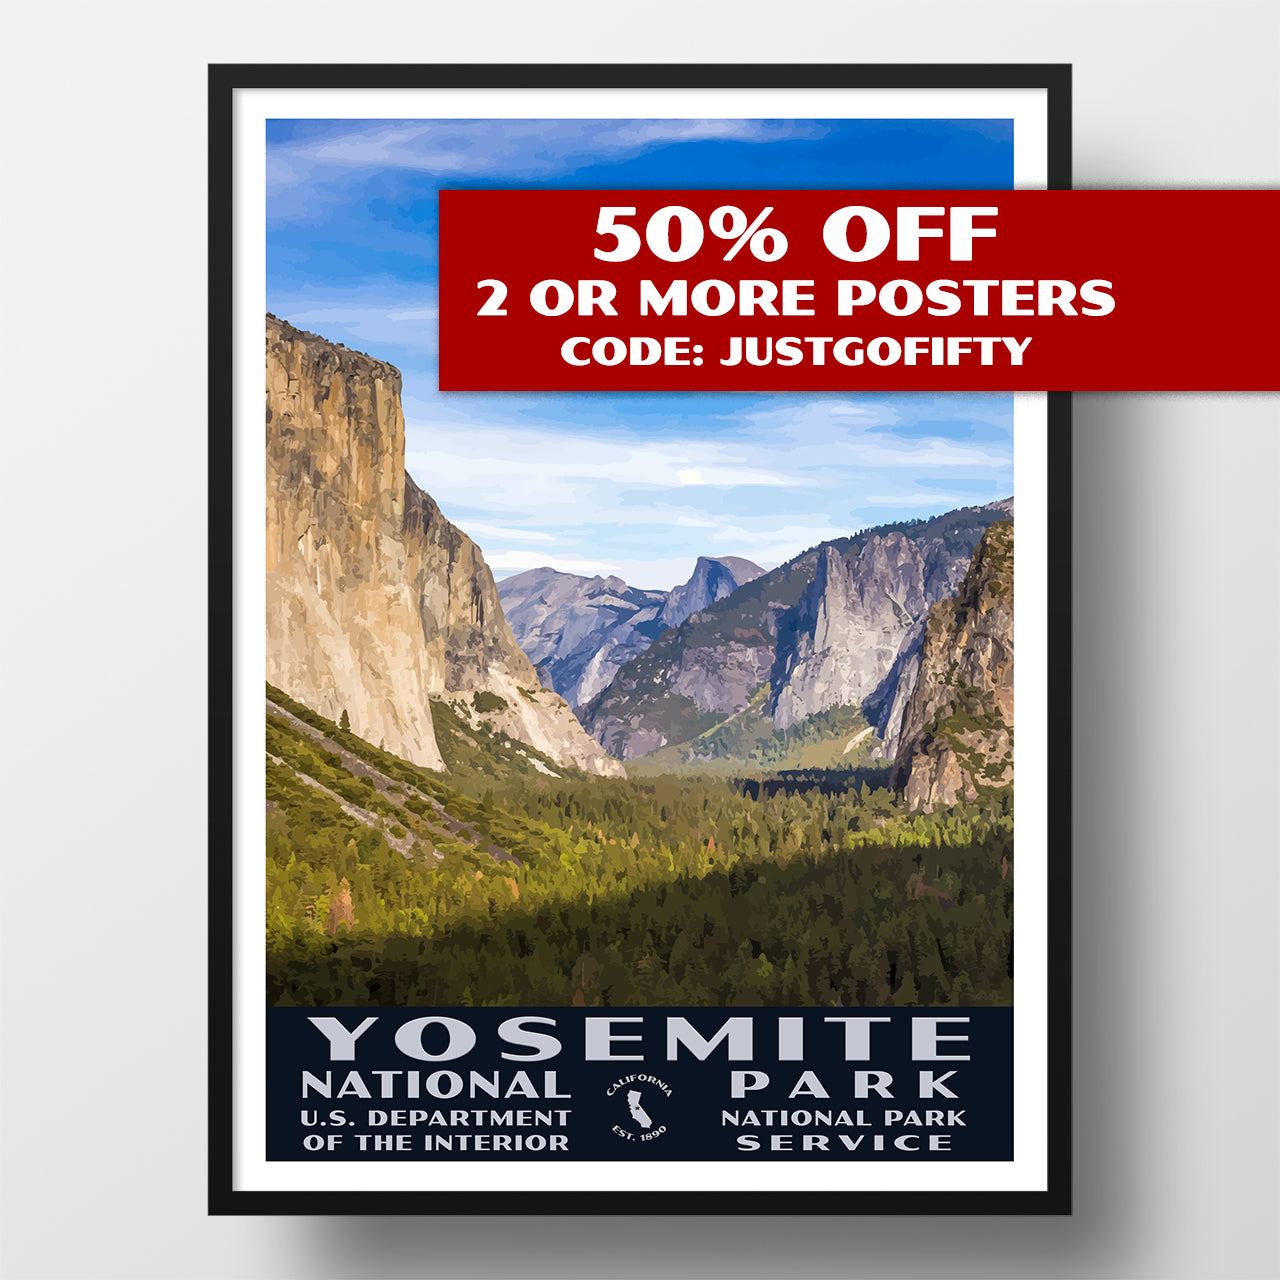 yosemite national park poster